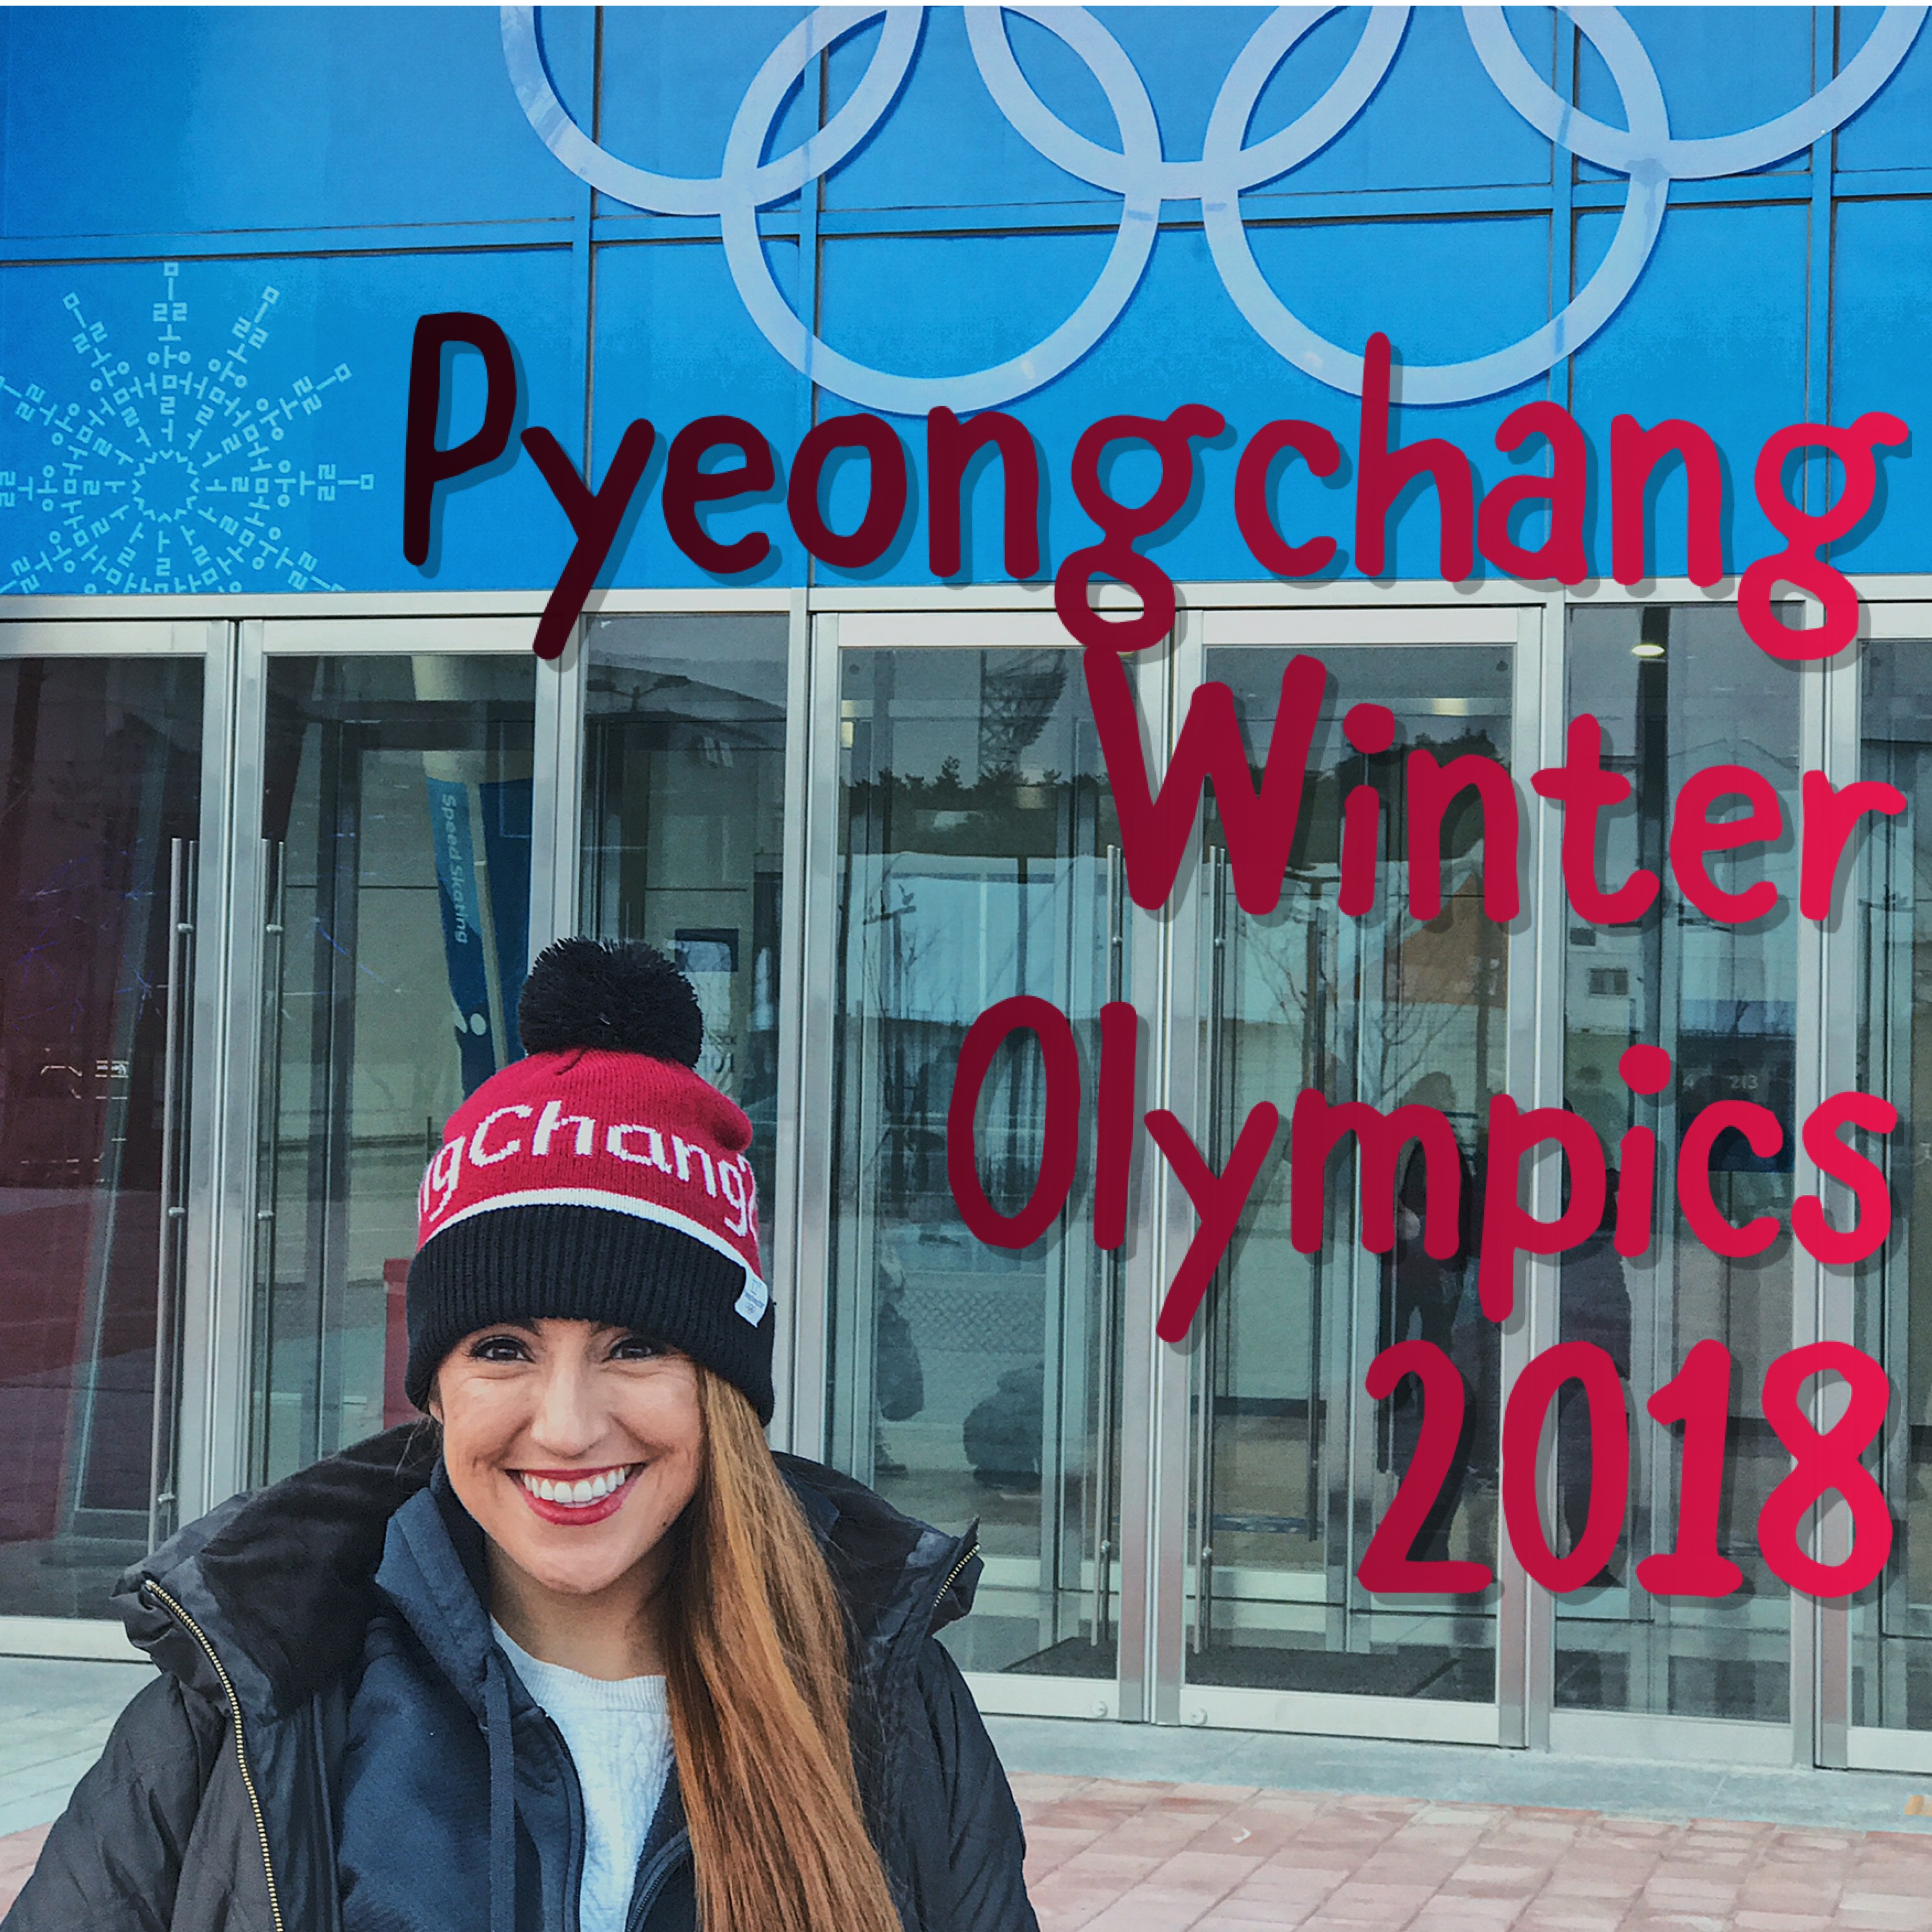 Pyeongchang Winter Olympics 2018